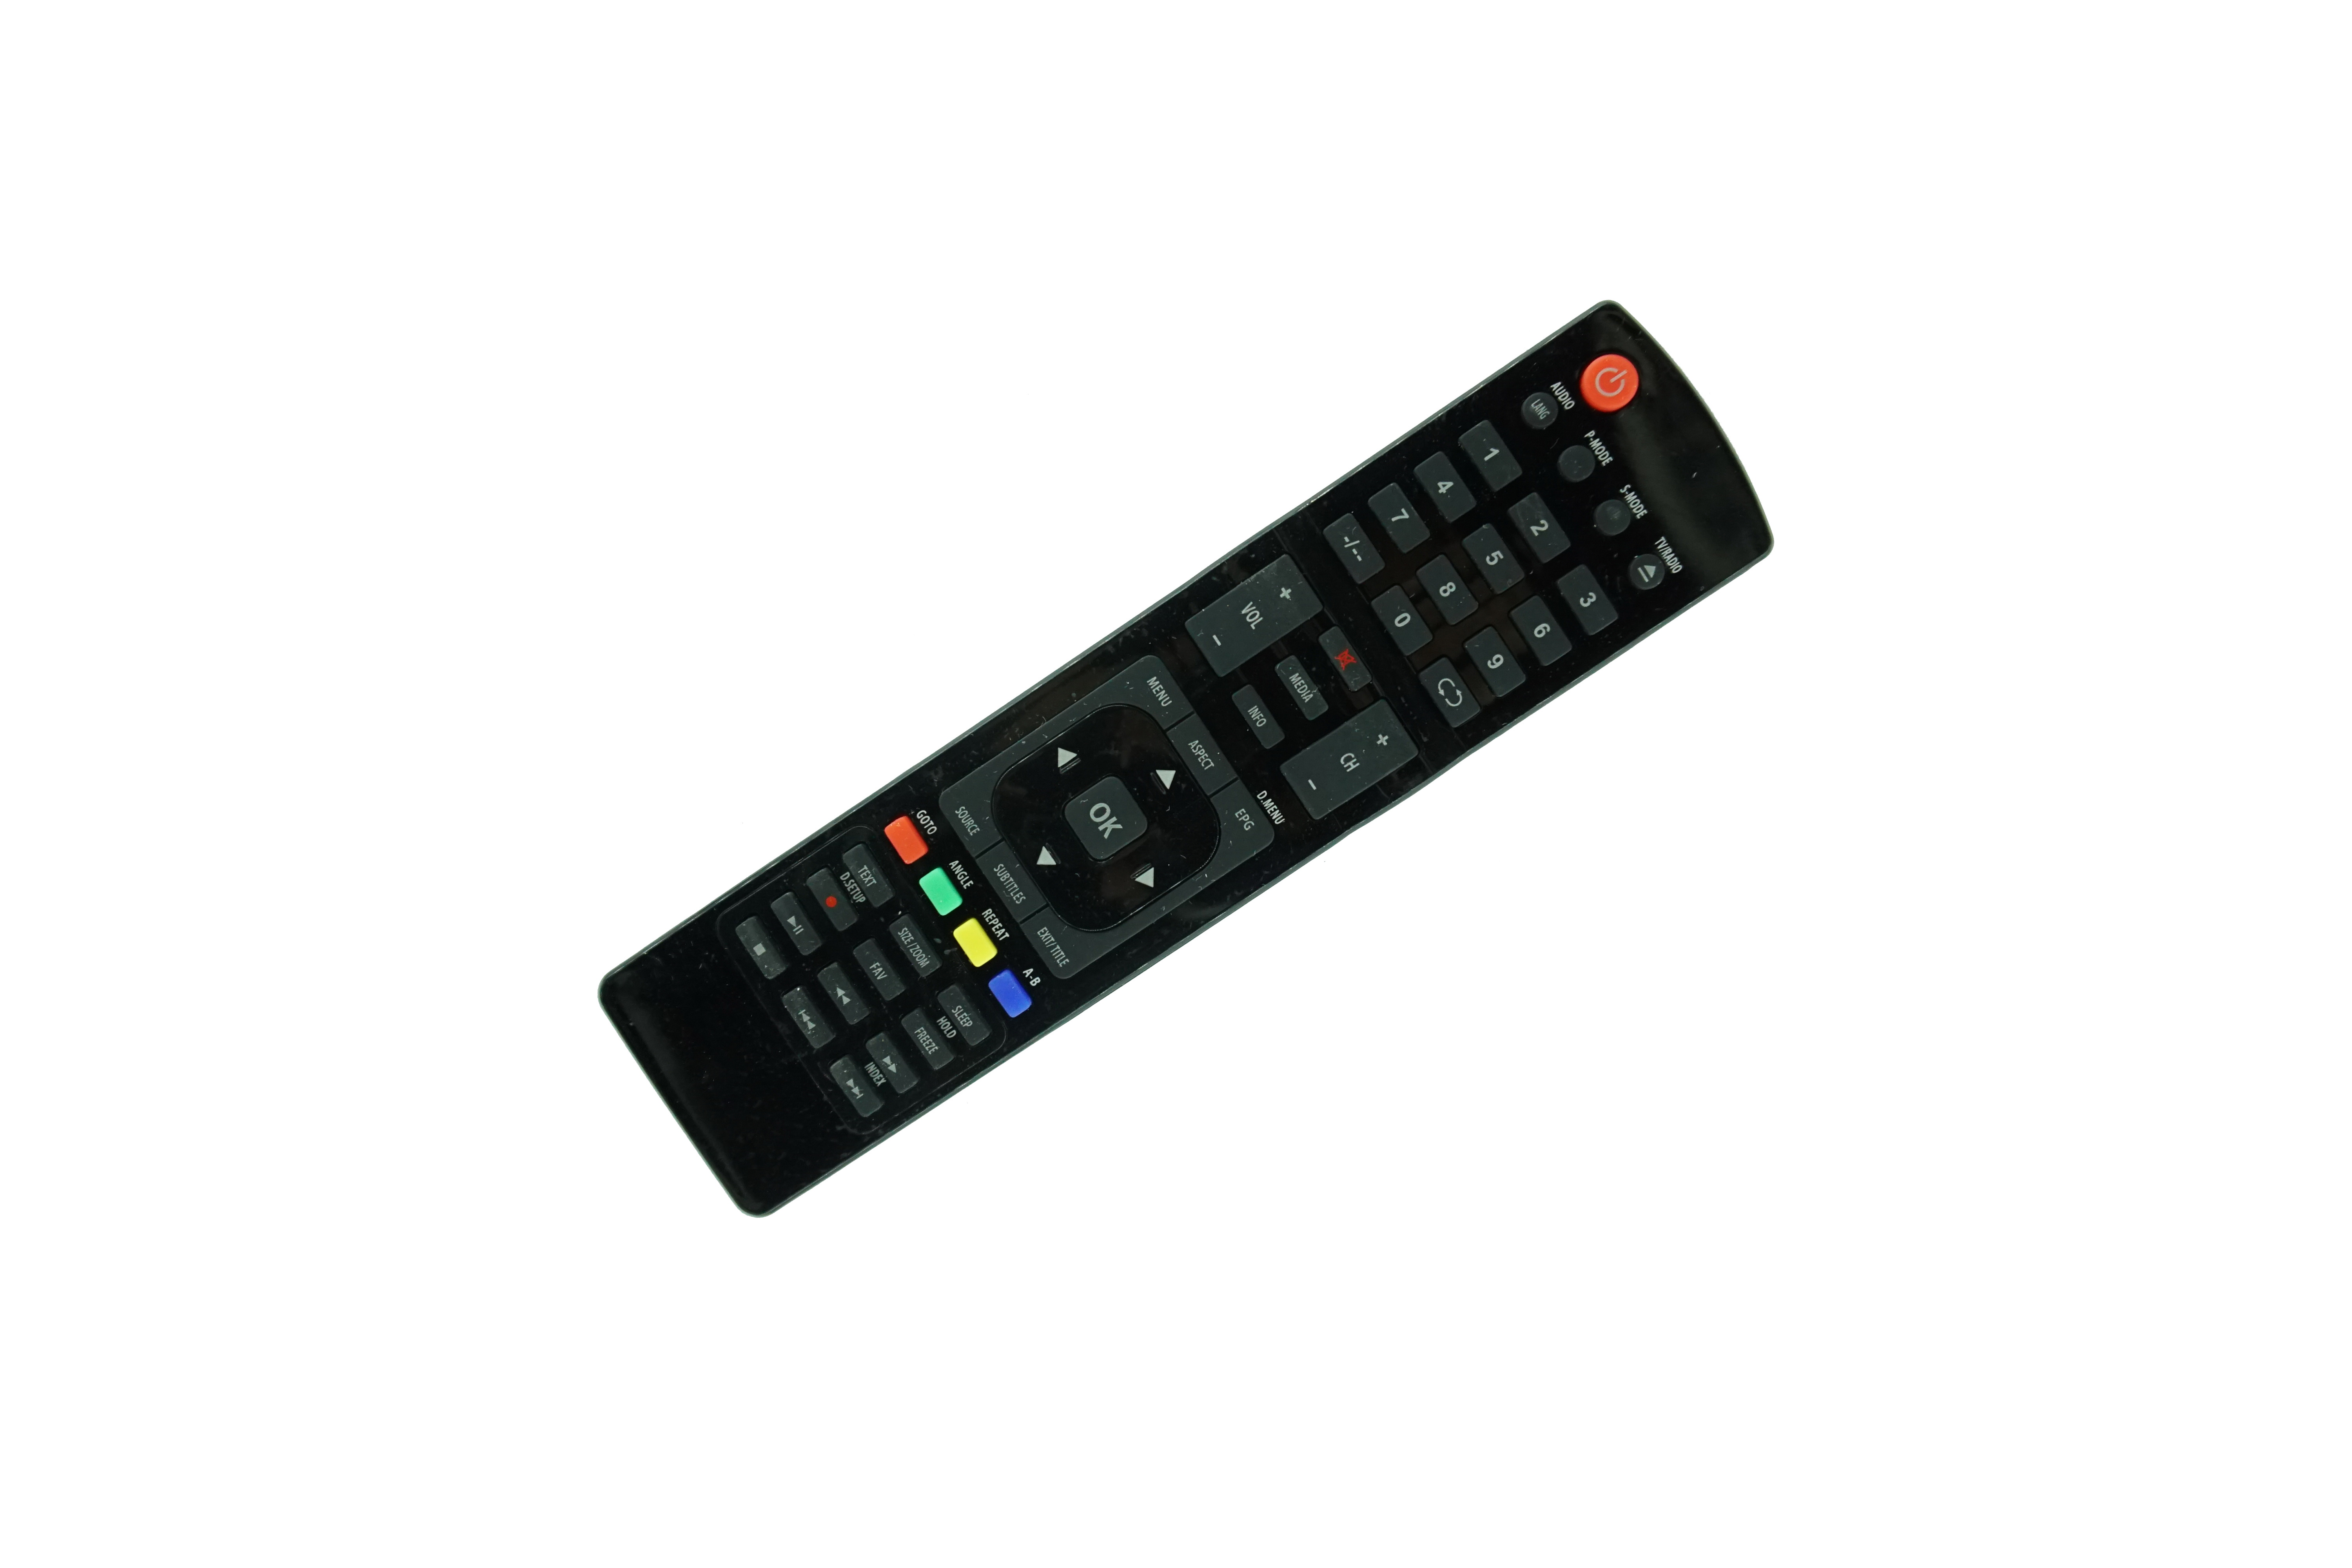 

Remote Control For Akai Akai AK-VJ5515FHD AK-VJ5516UHDSM Smart UHD LED LCD HDTV TV